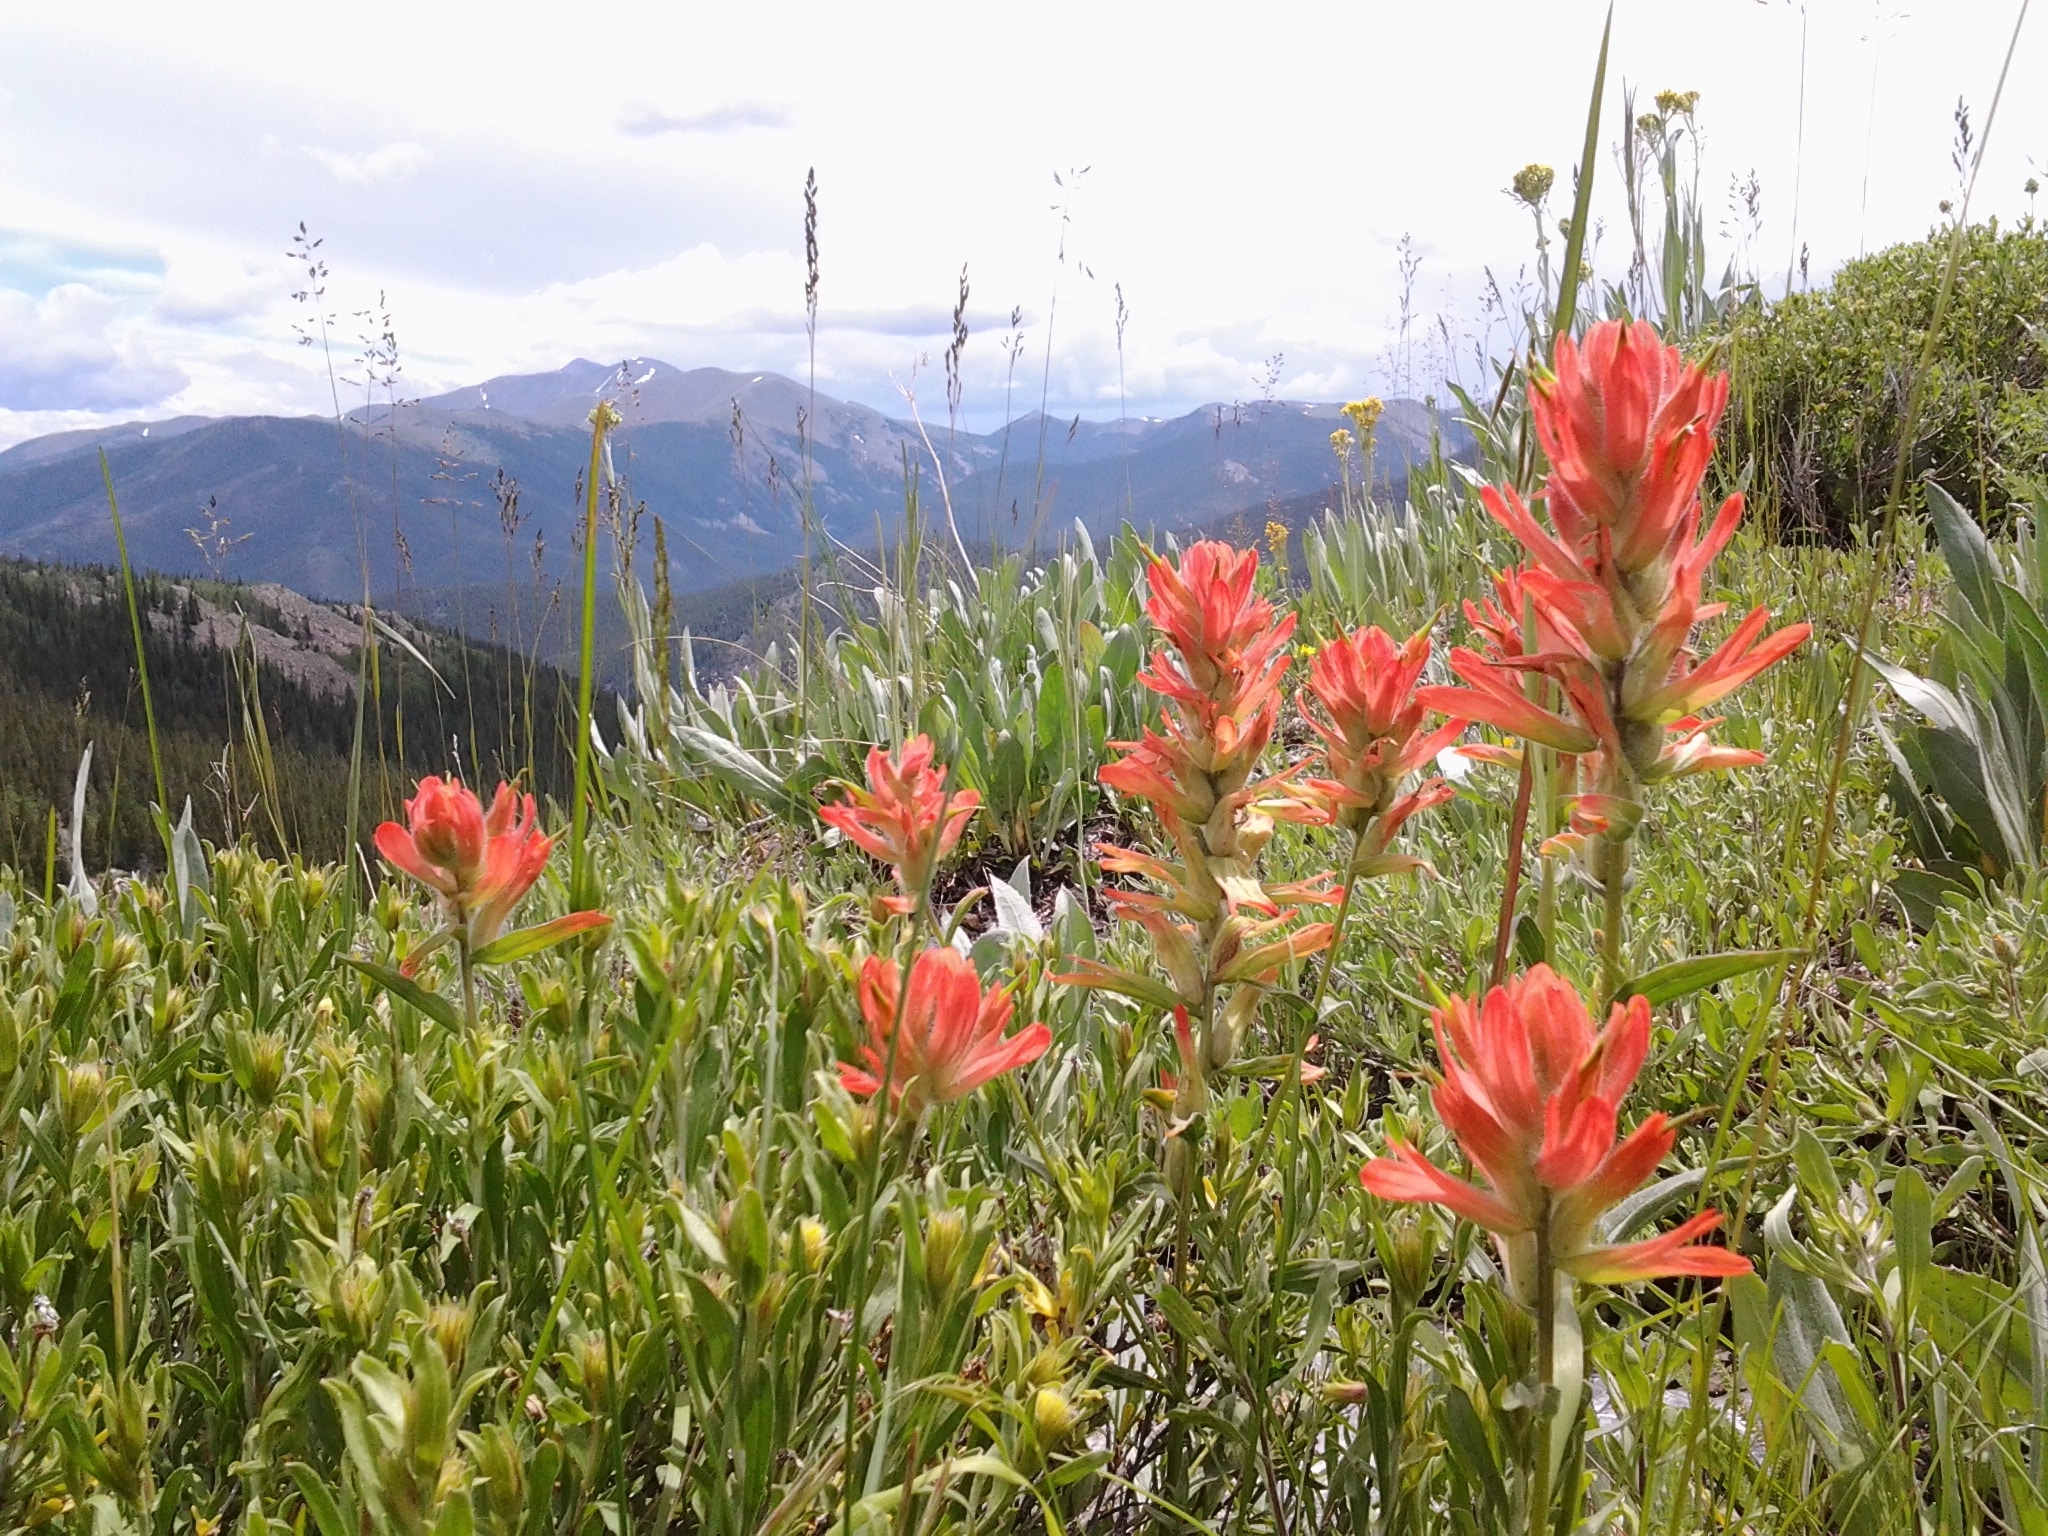 Wild flowers along the rocky mountain.